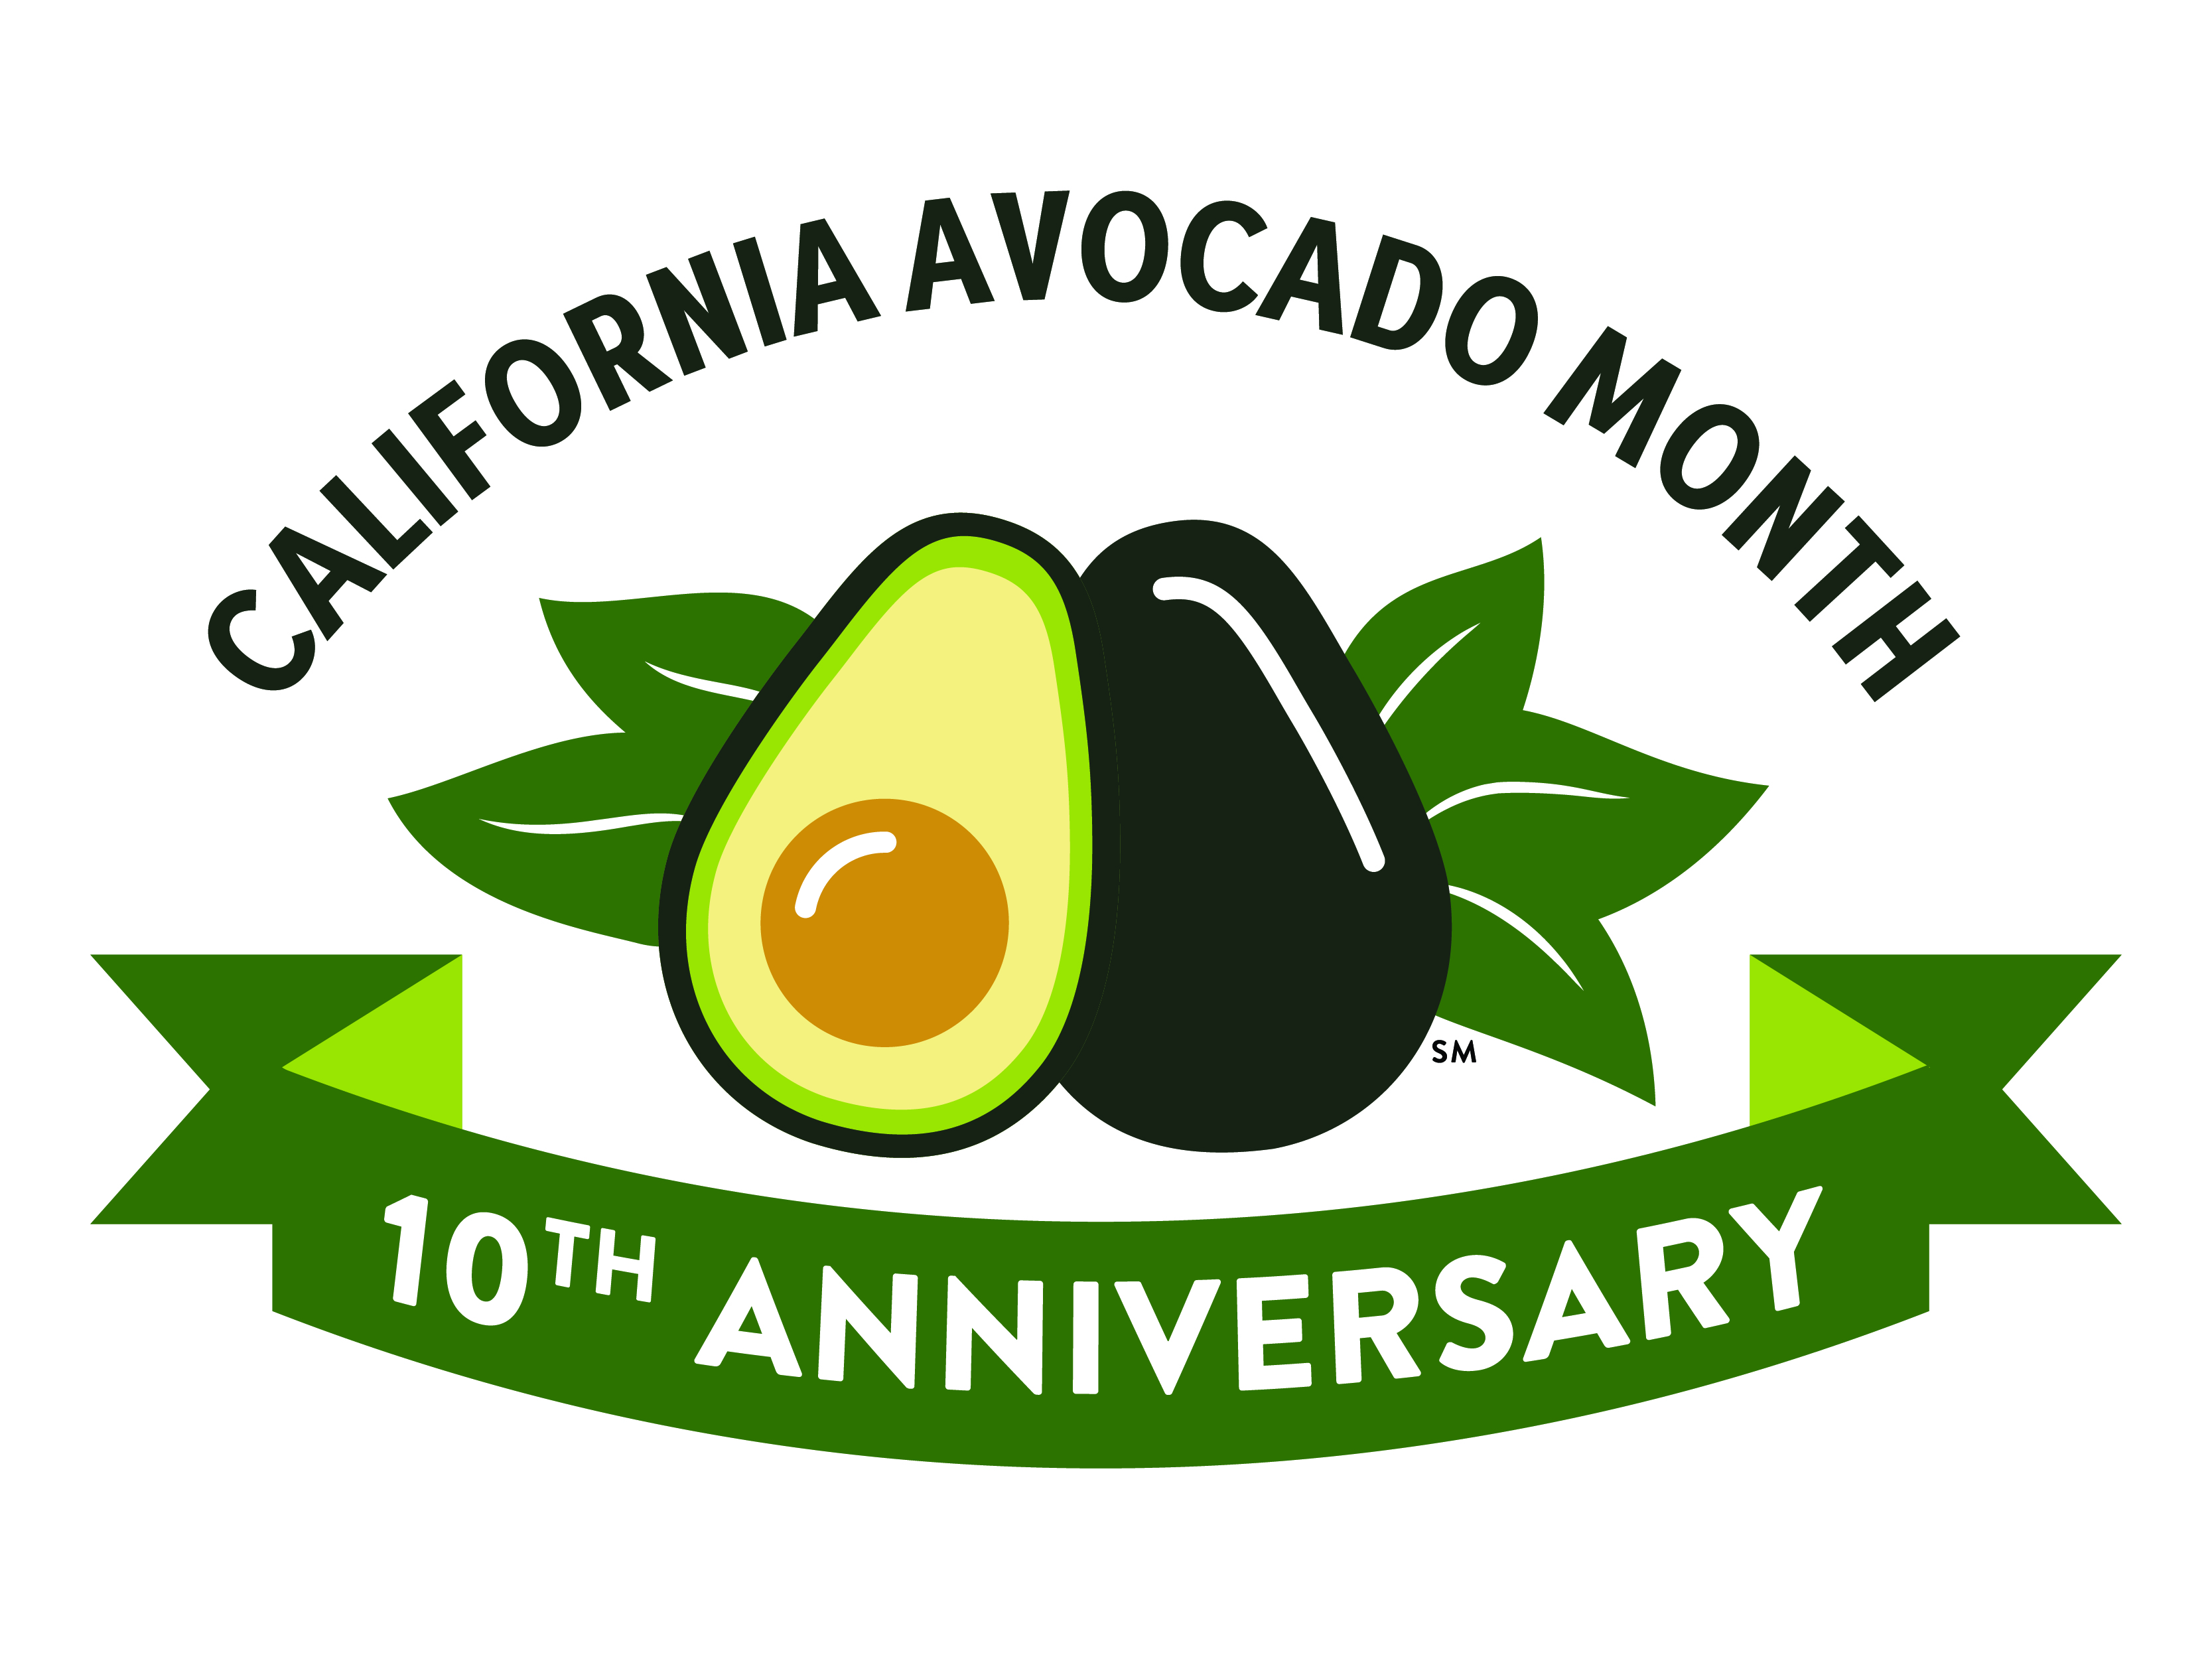 cal avocado month tenth anniversary.jpg